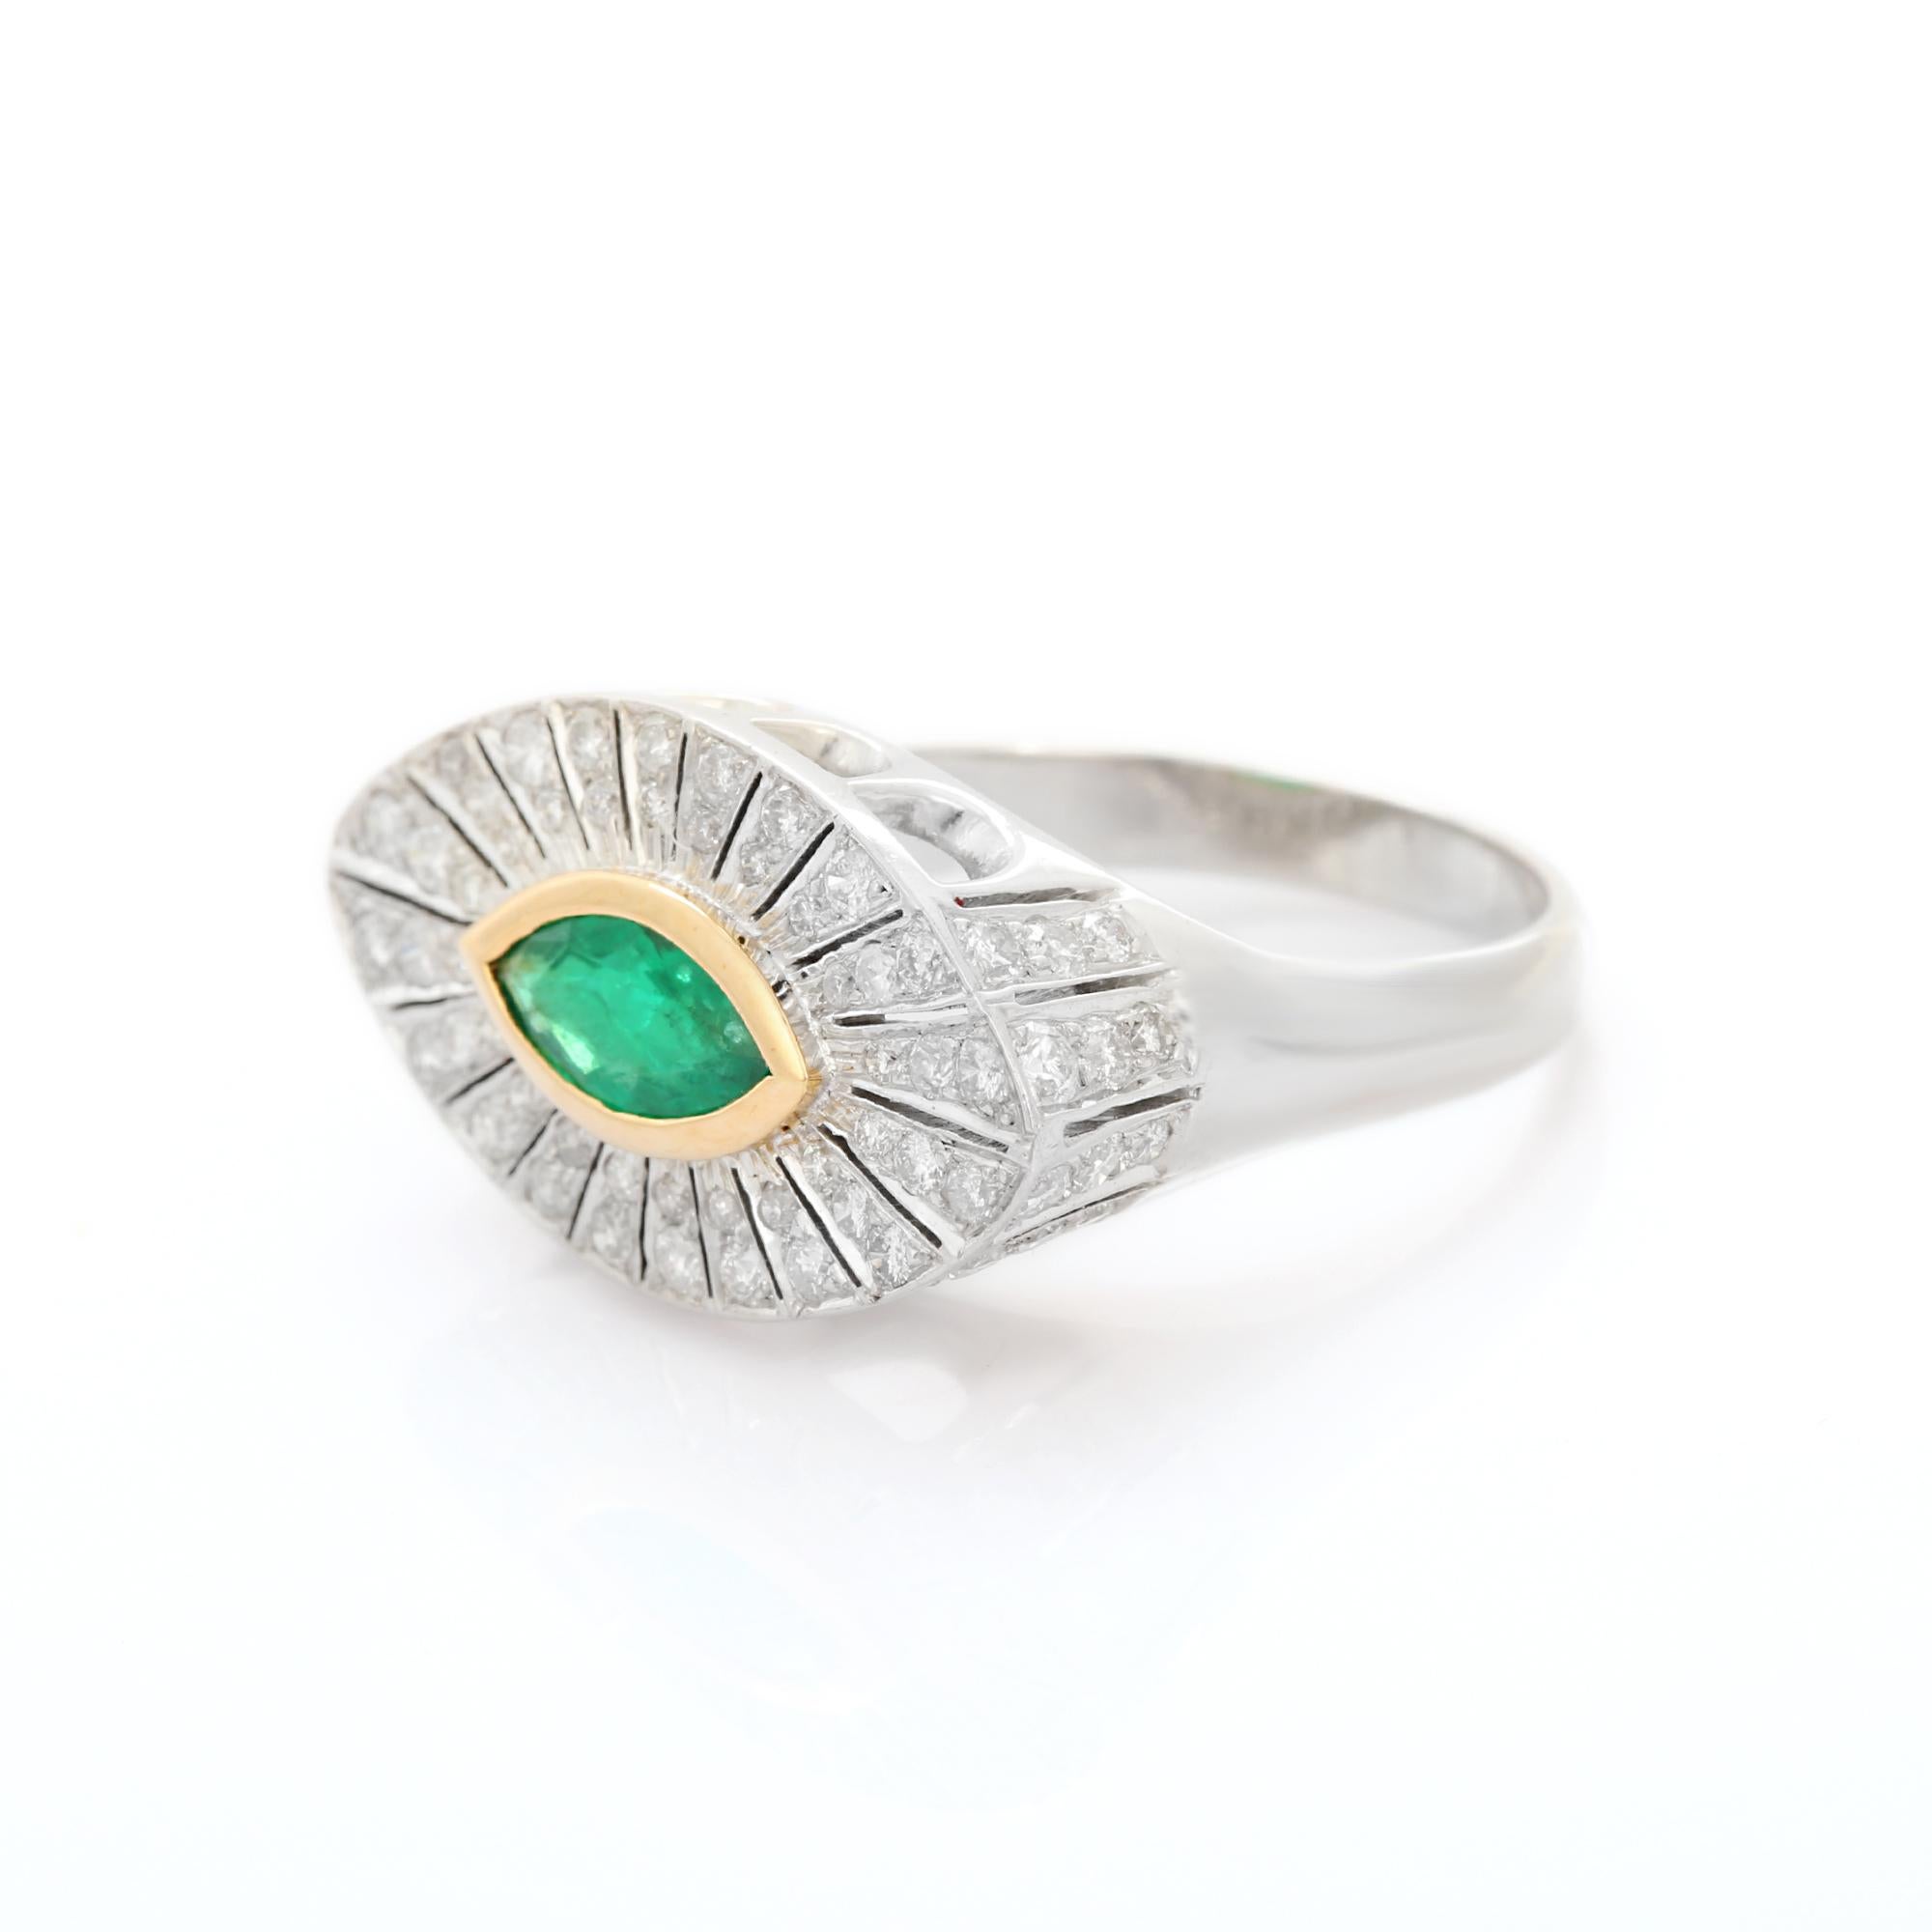 For Sale:  Statement Evil Eye Emerald Diamond Ring in 18 Karat White Gold 4